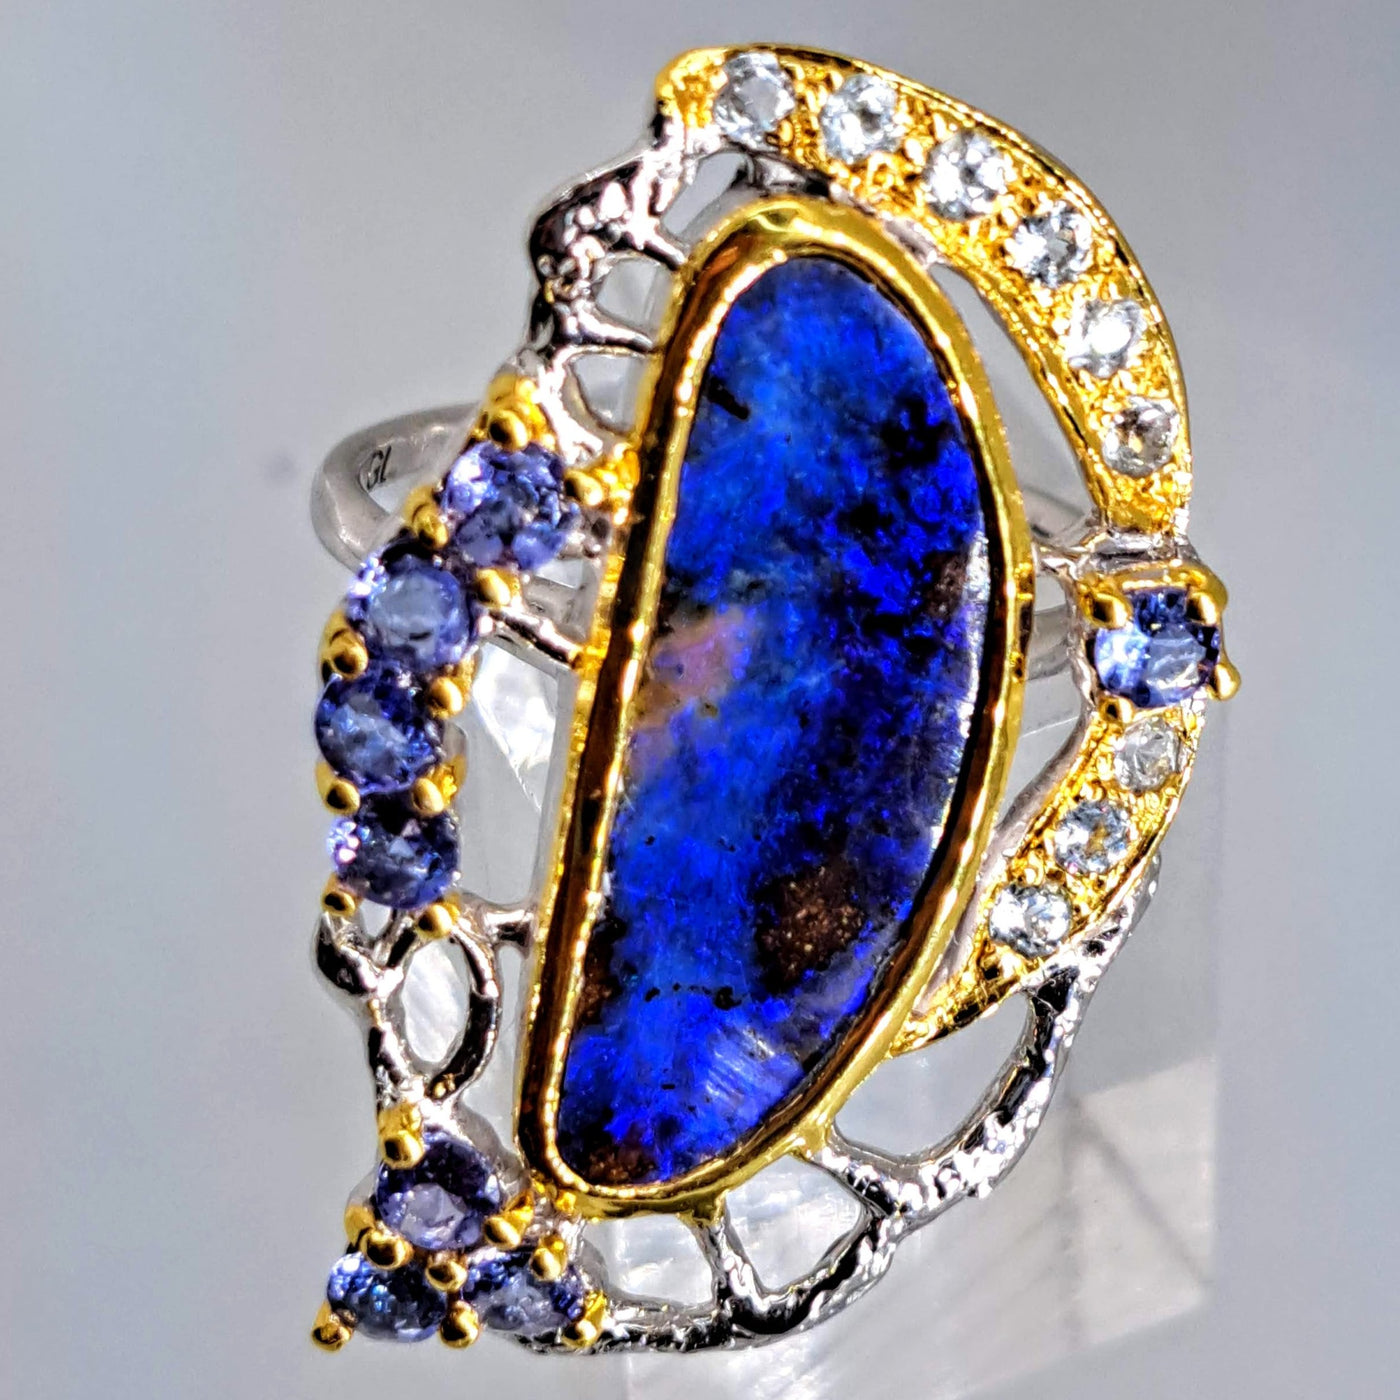 "Blue Heaven" Sz 8 Ring - Tanzanite, Boulder Opal, Blue Topaz. .925 Sterling silver and 18k gold